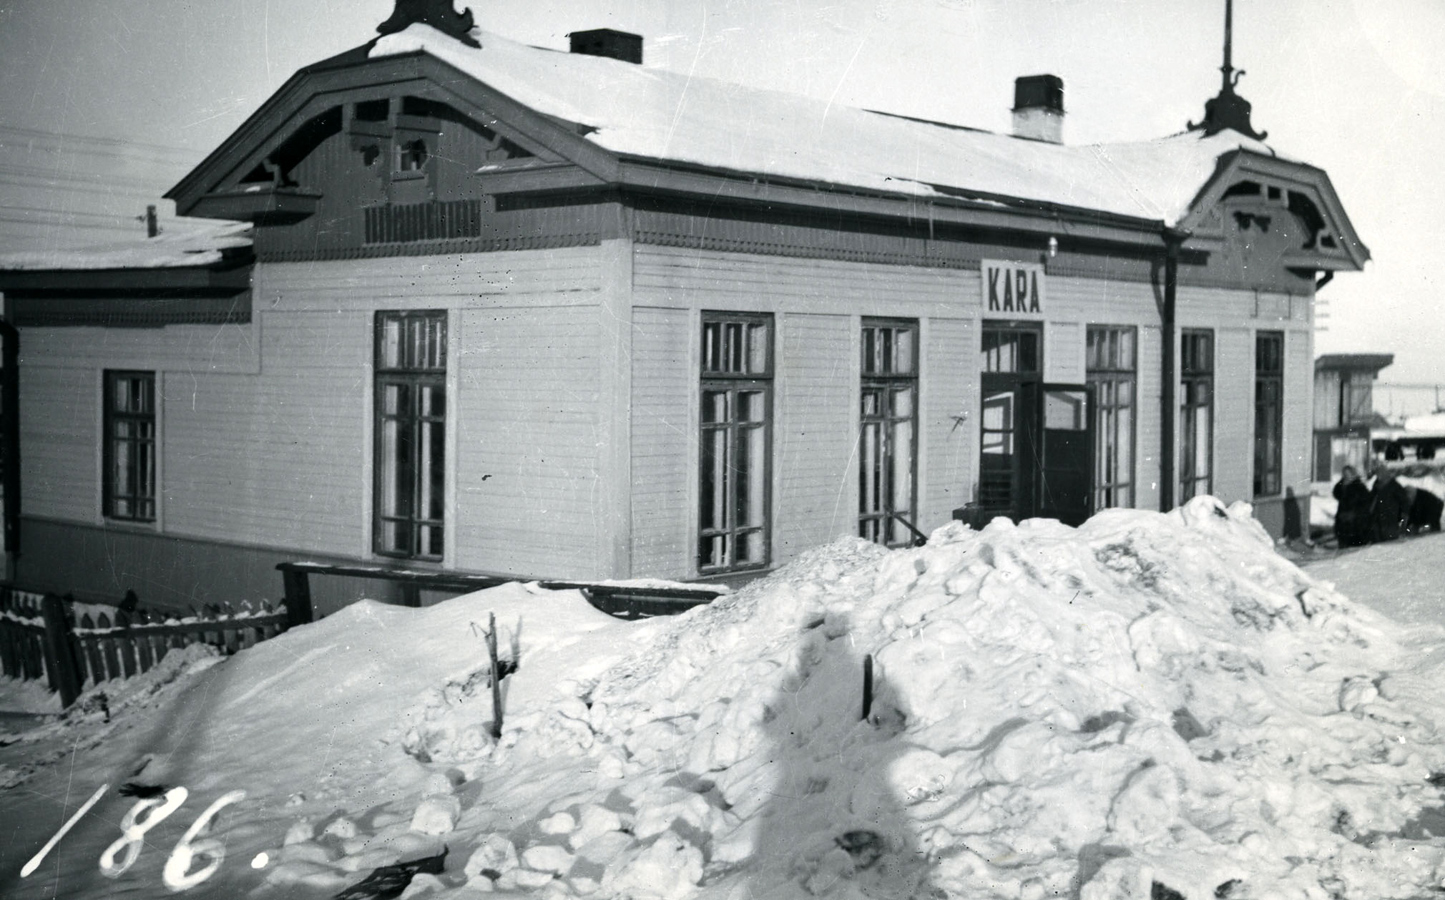 1941. Kara station building